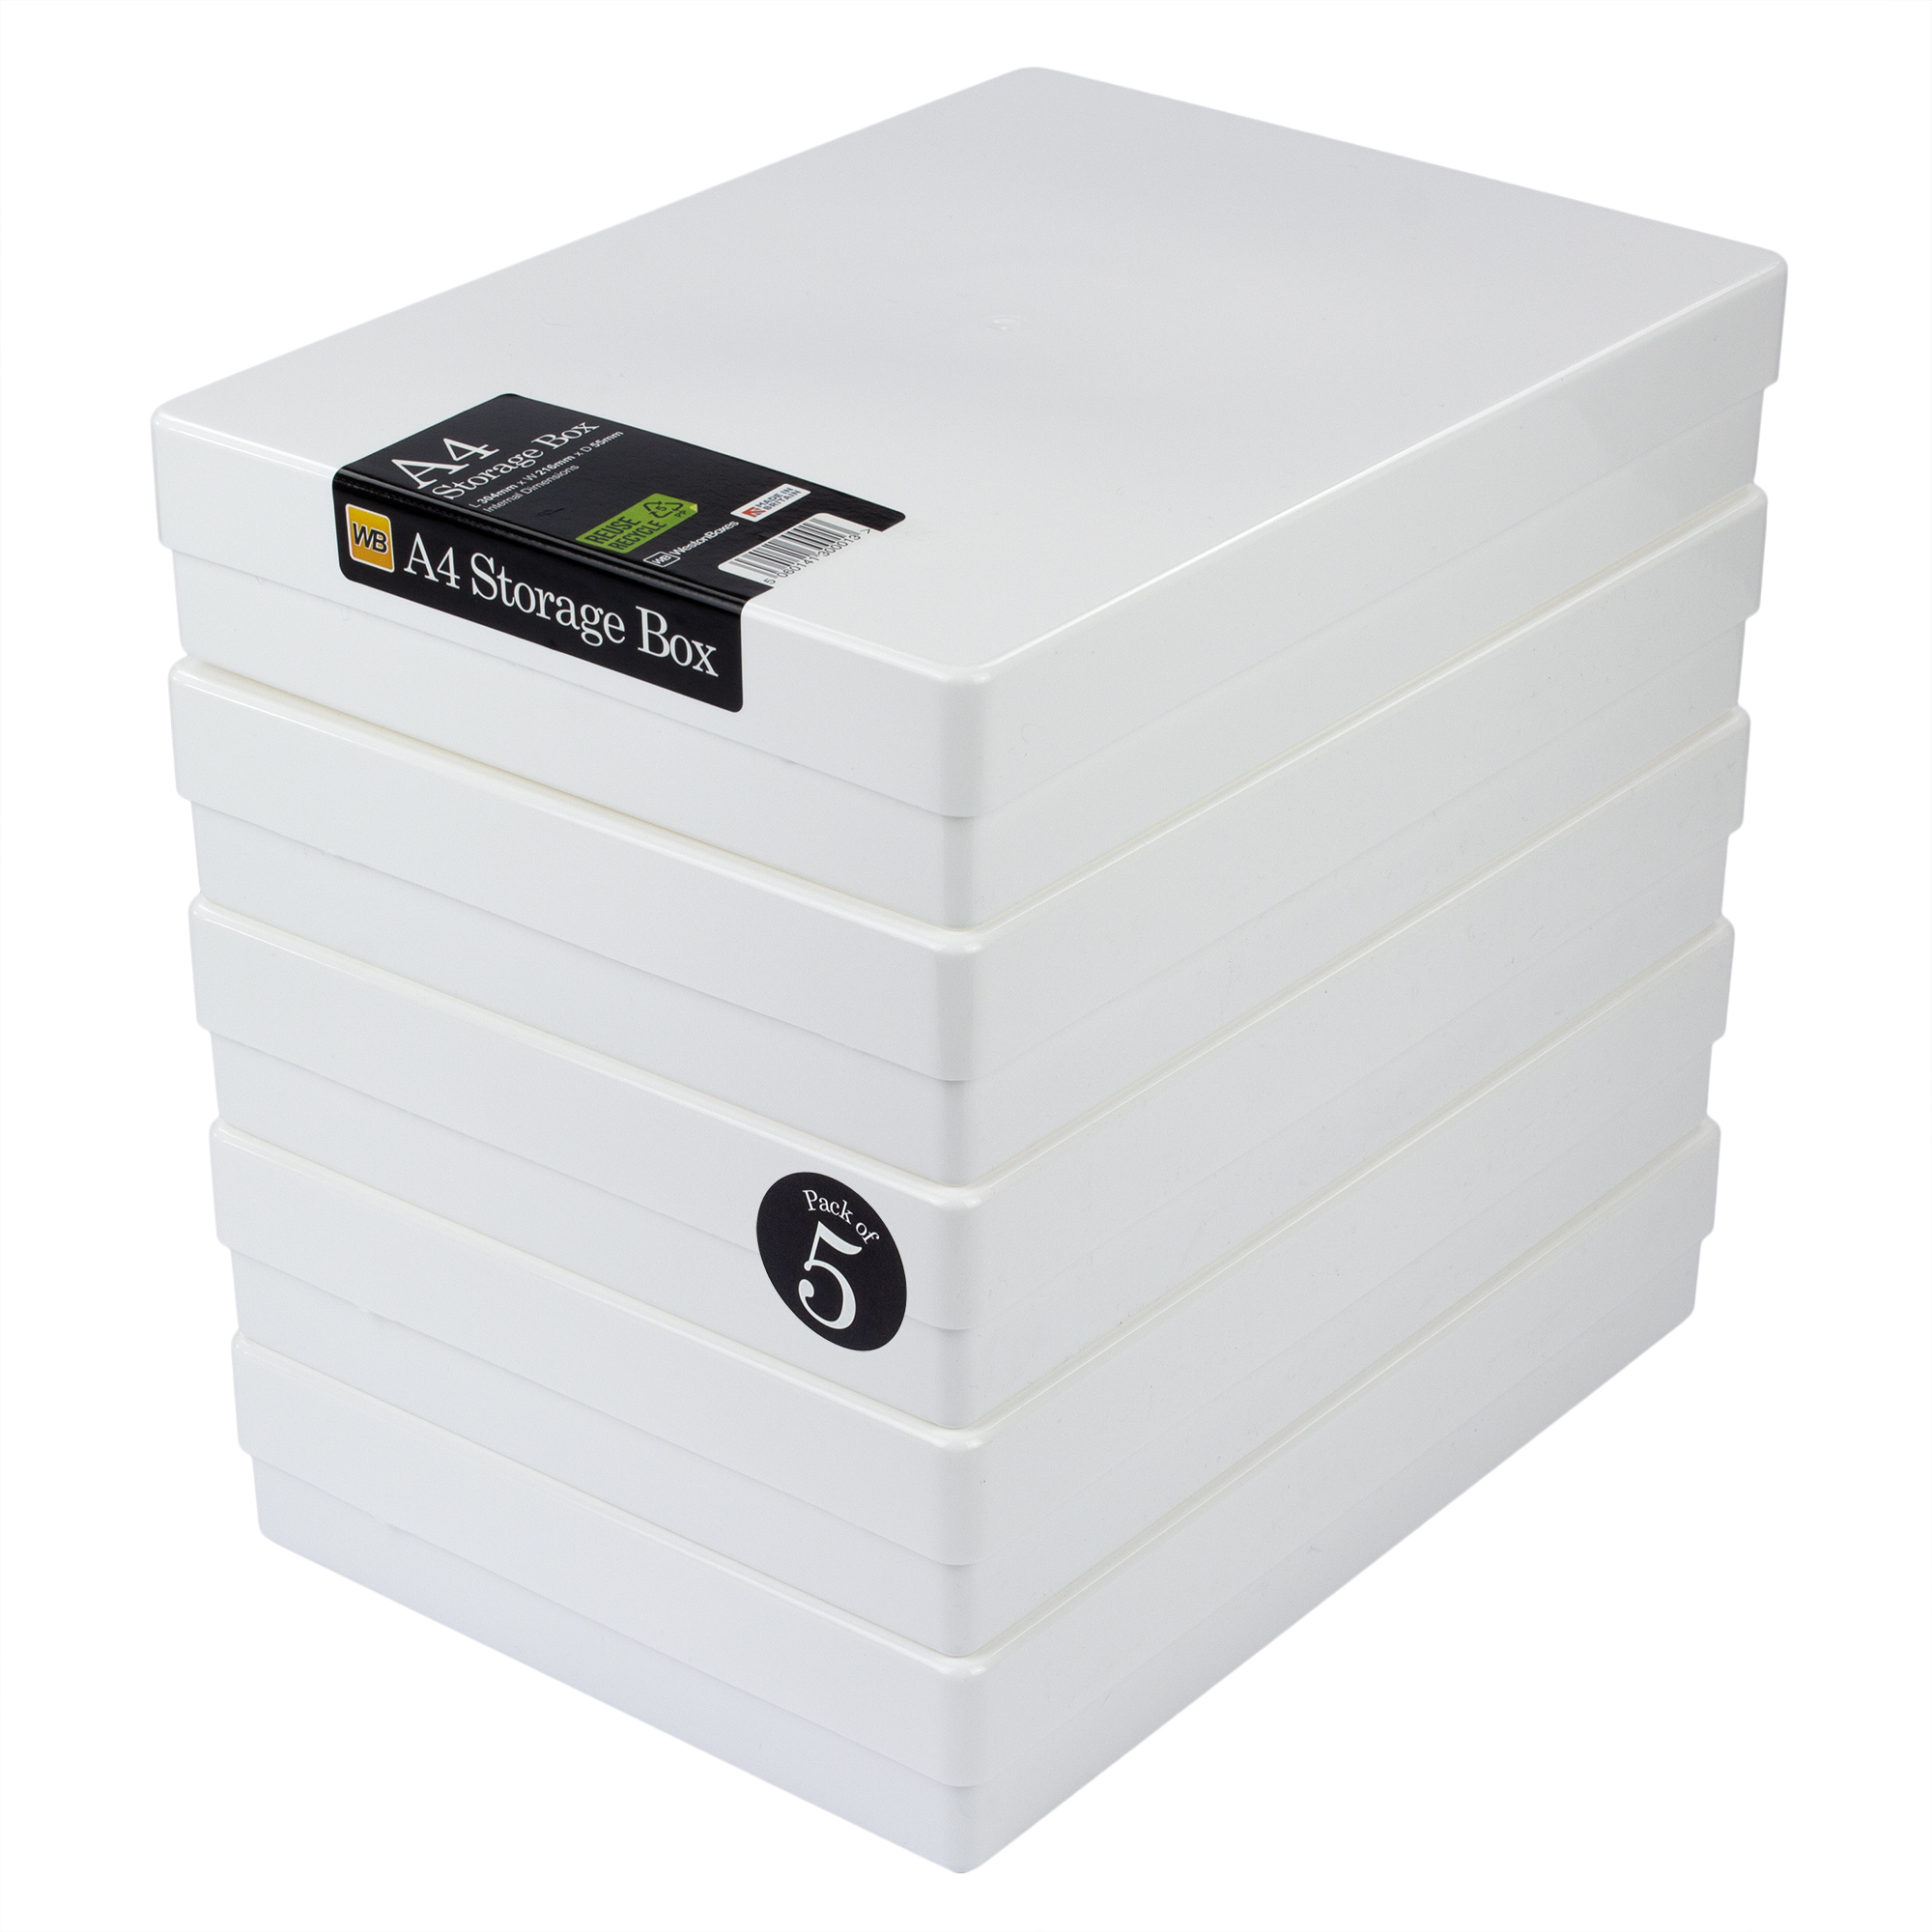 A4 Storage Box, White, Opaque, TOUGH - Trade